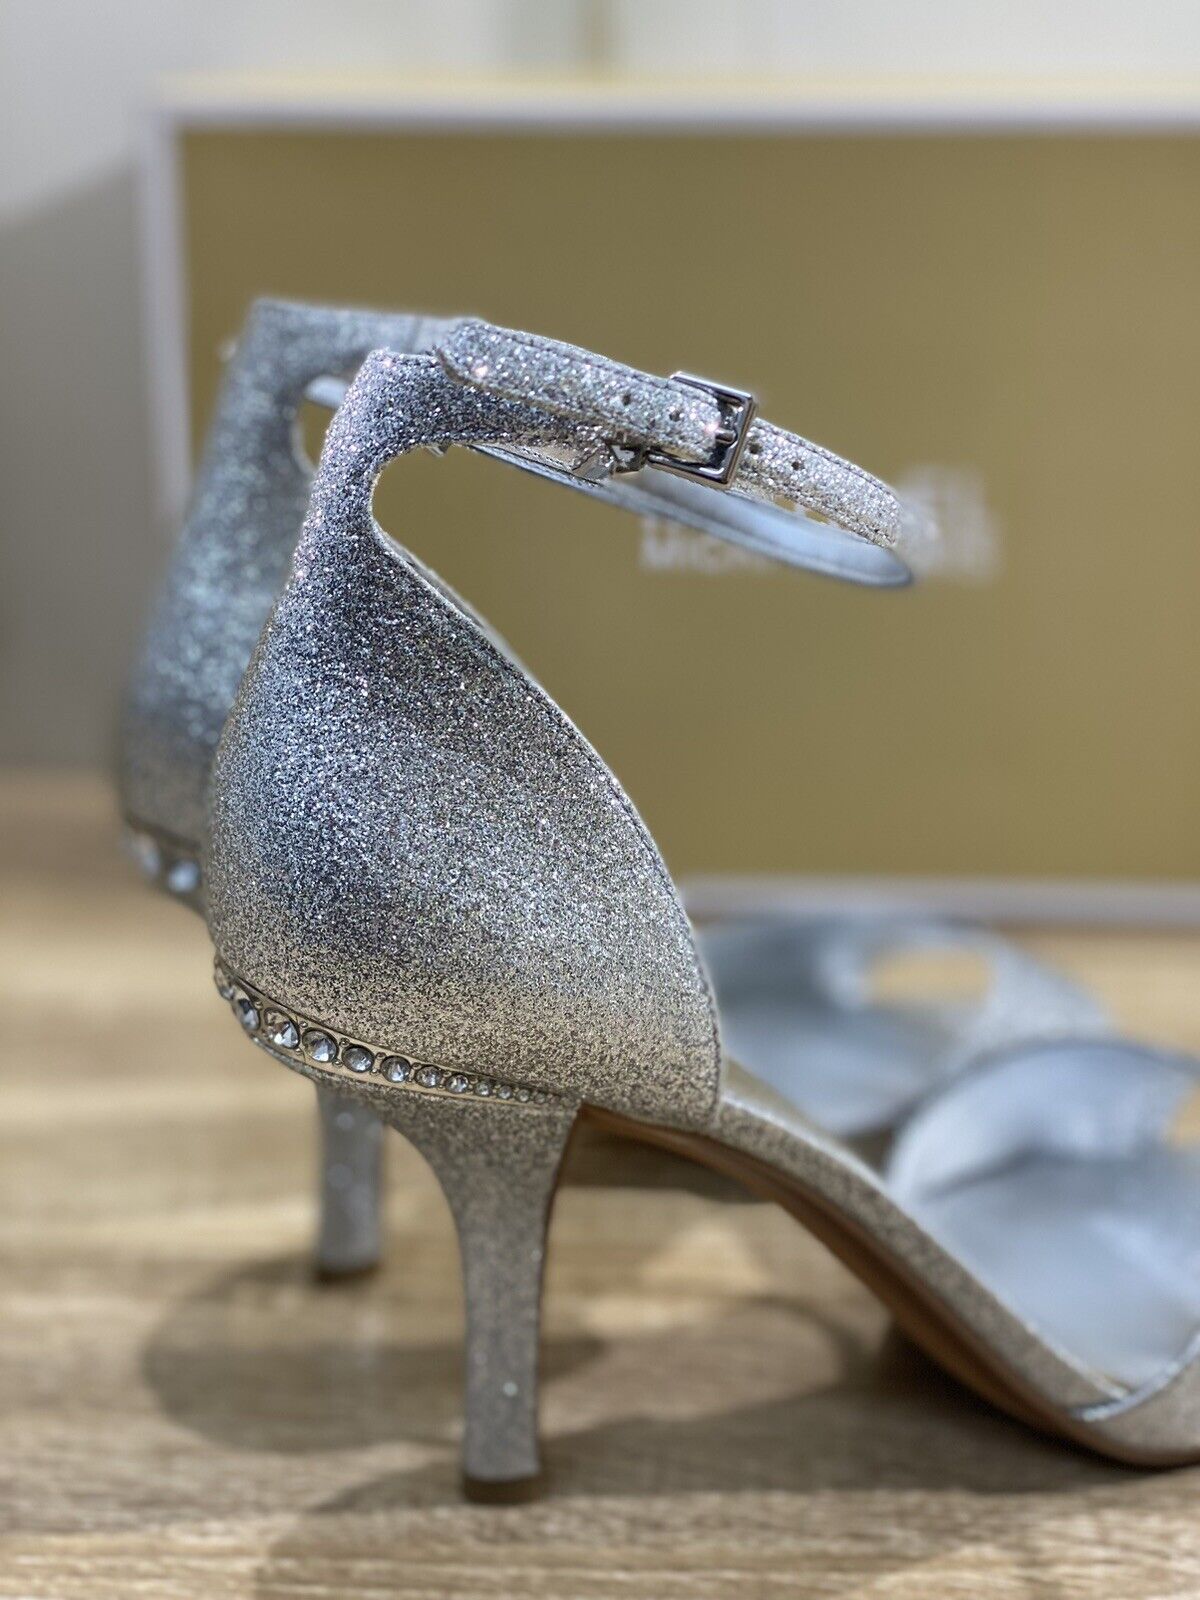 Michael Kors sandalo donna malinda silver glitter tacco luxury 39.5